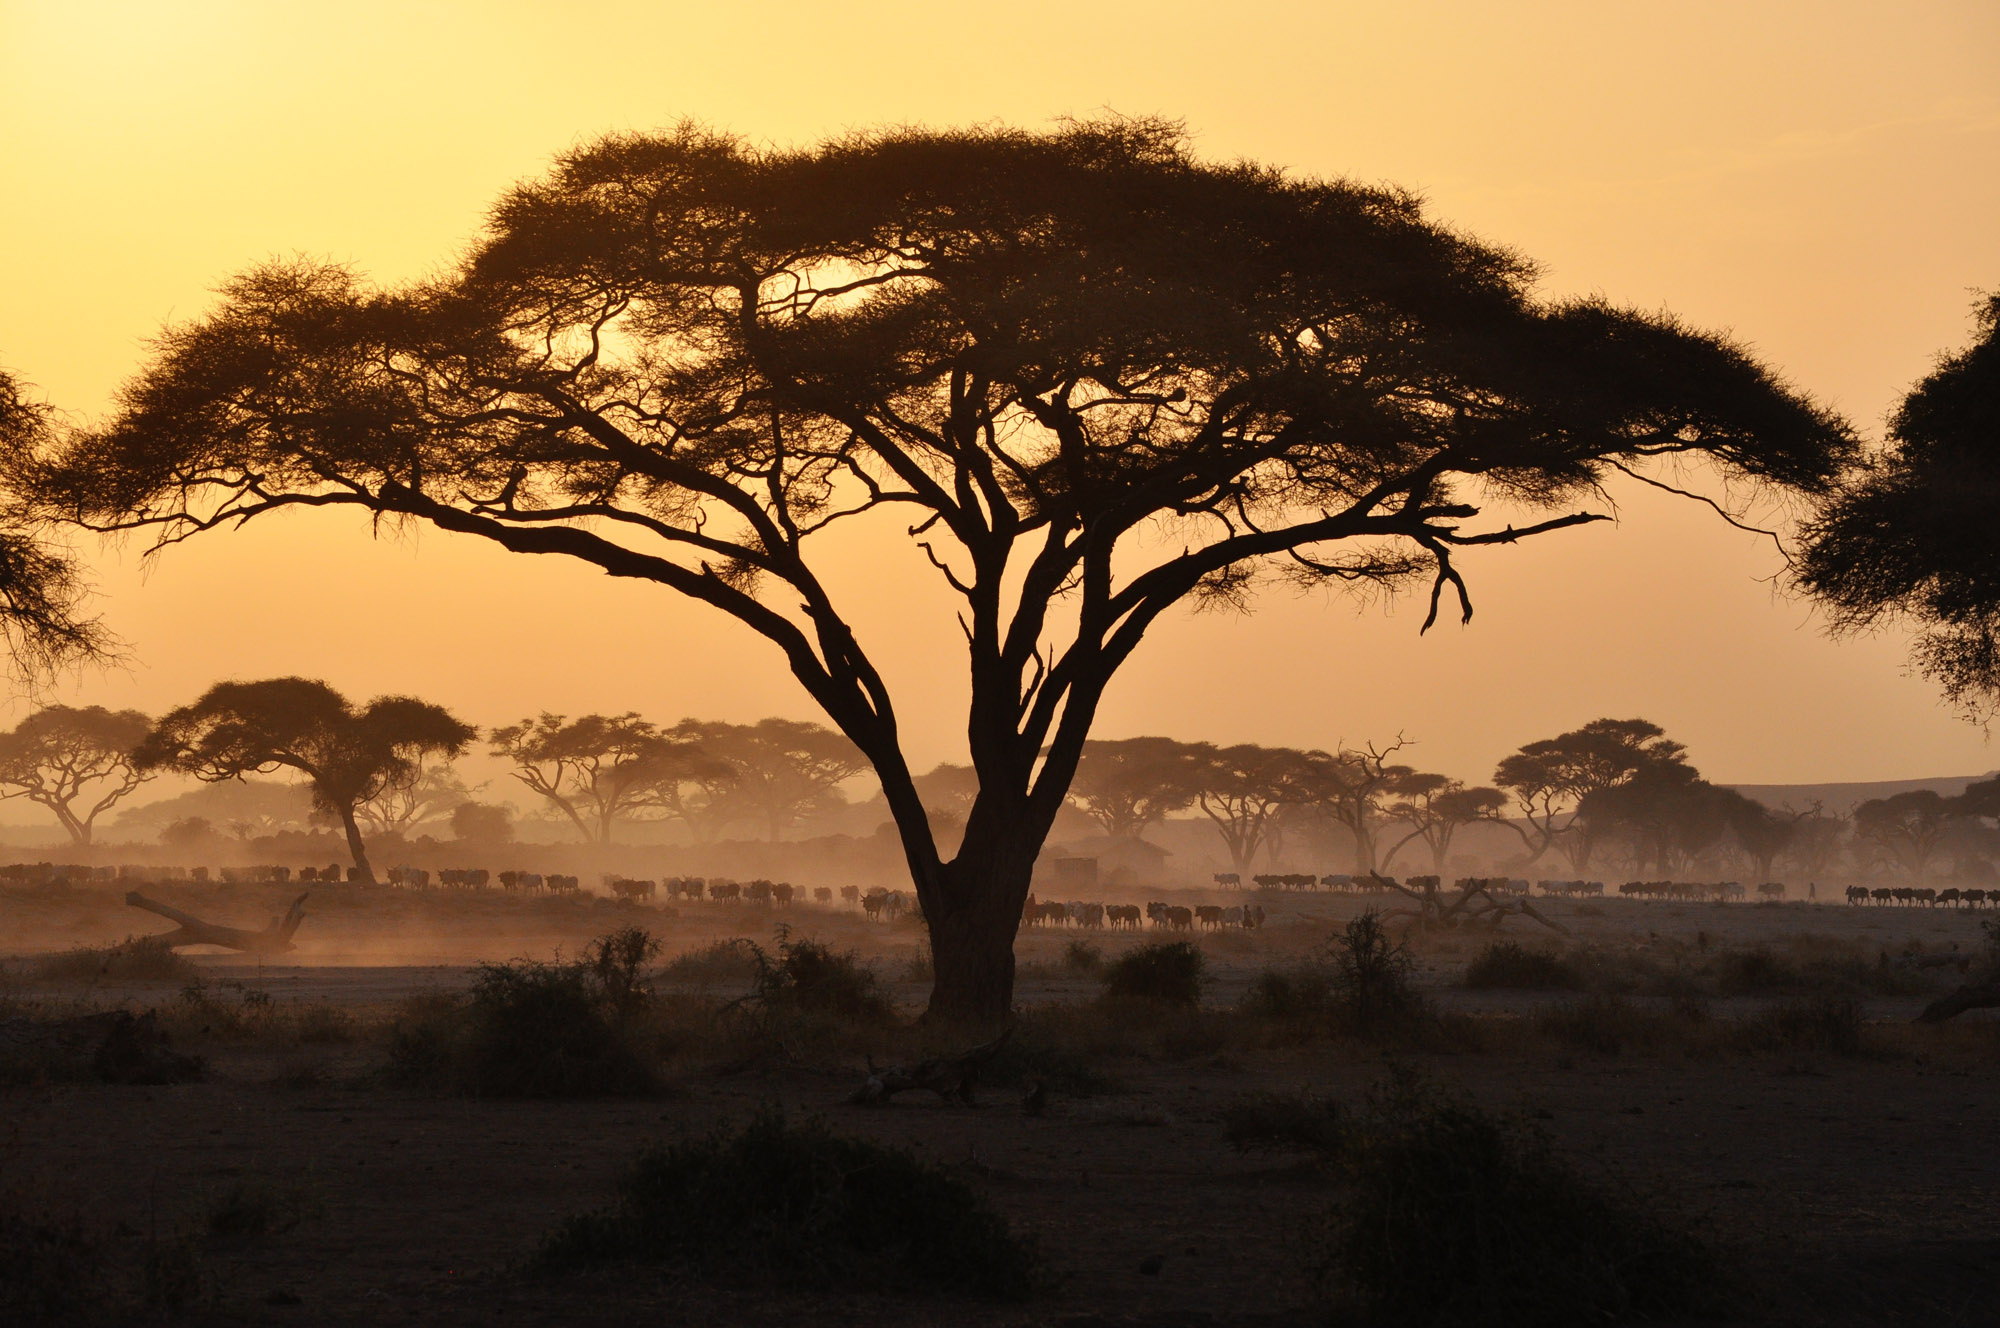 An acacia tree in the middle of masai mara.